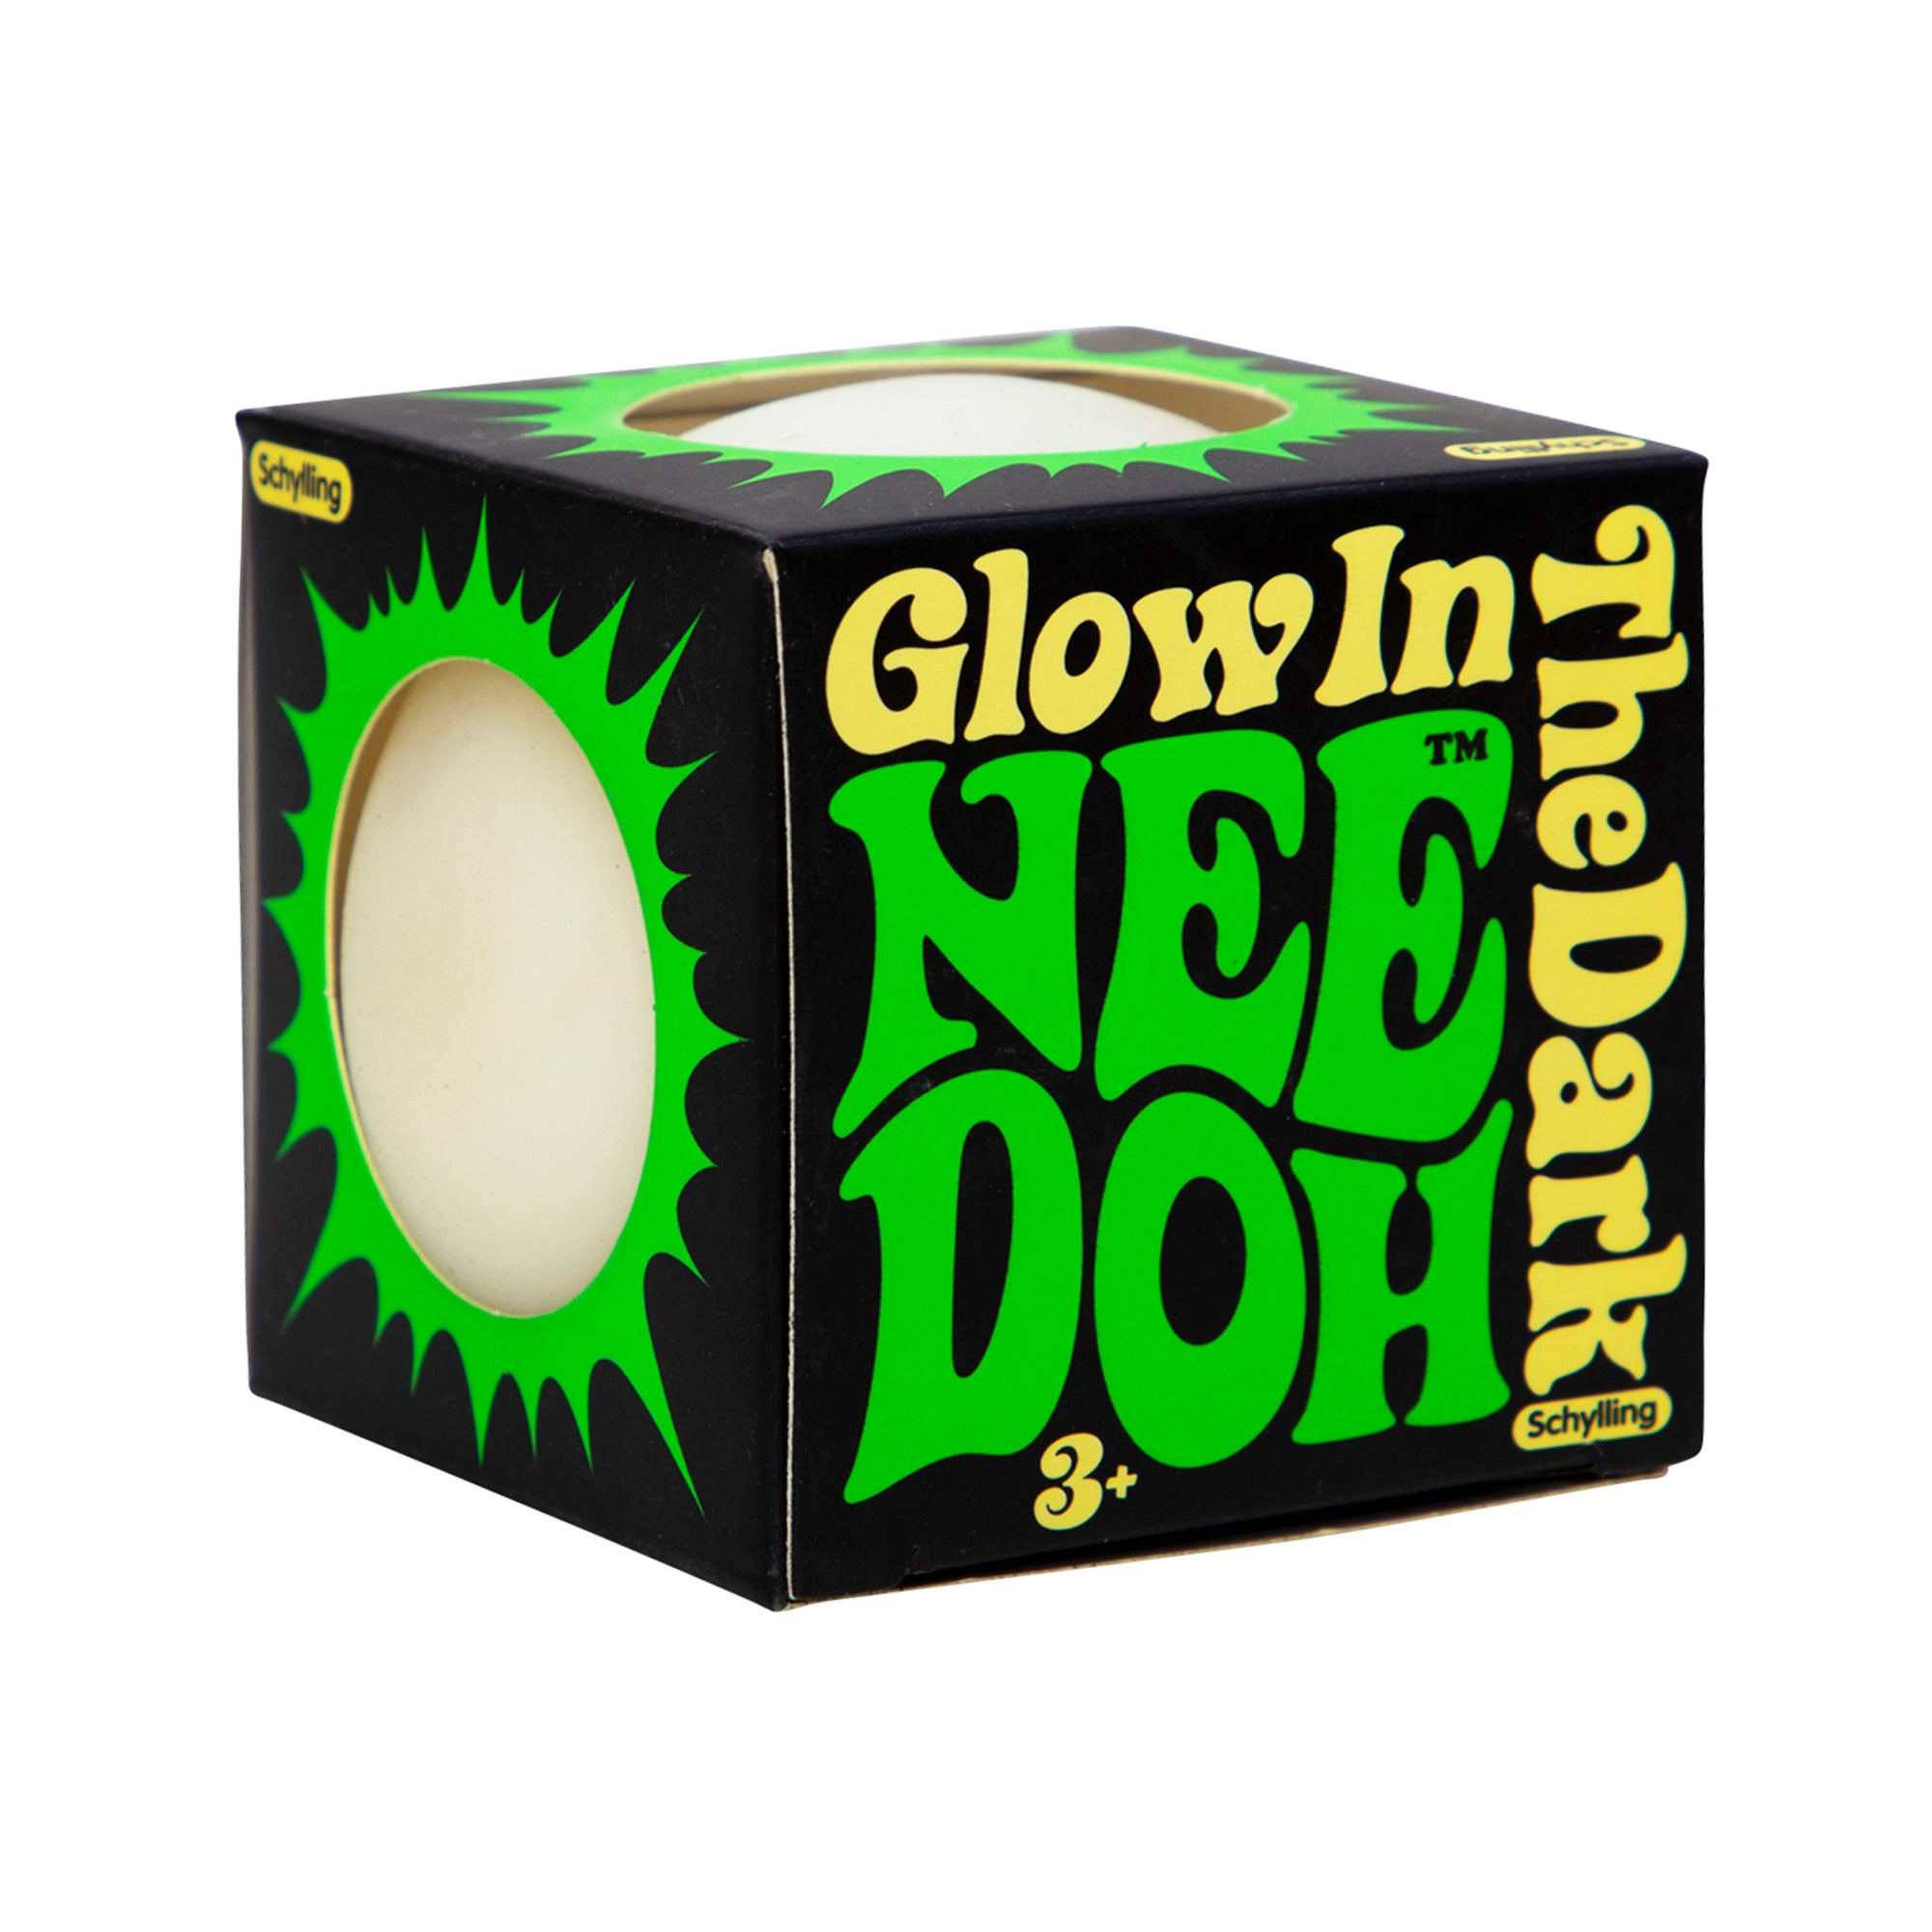 Glow In The Dark Nee Doh